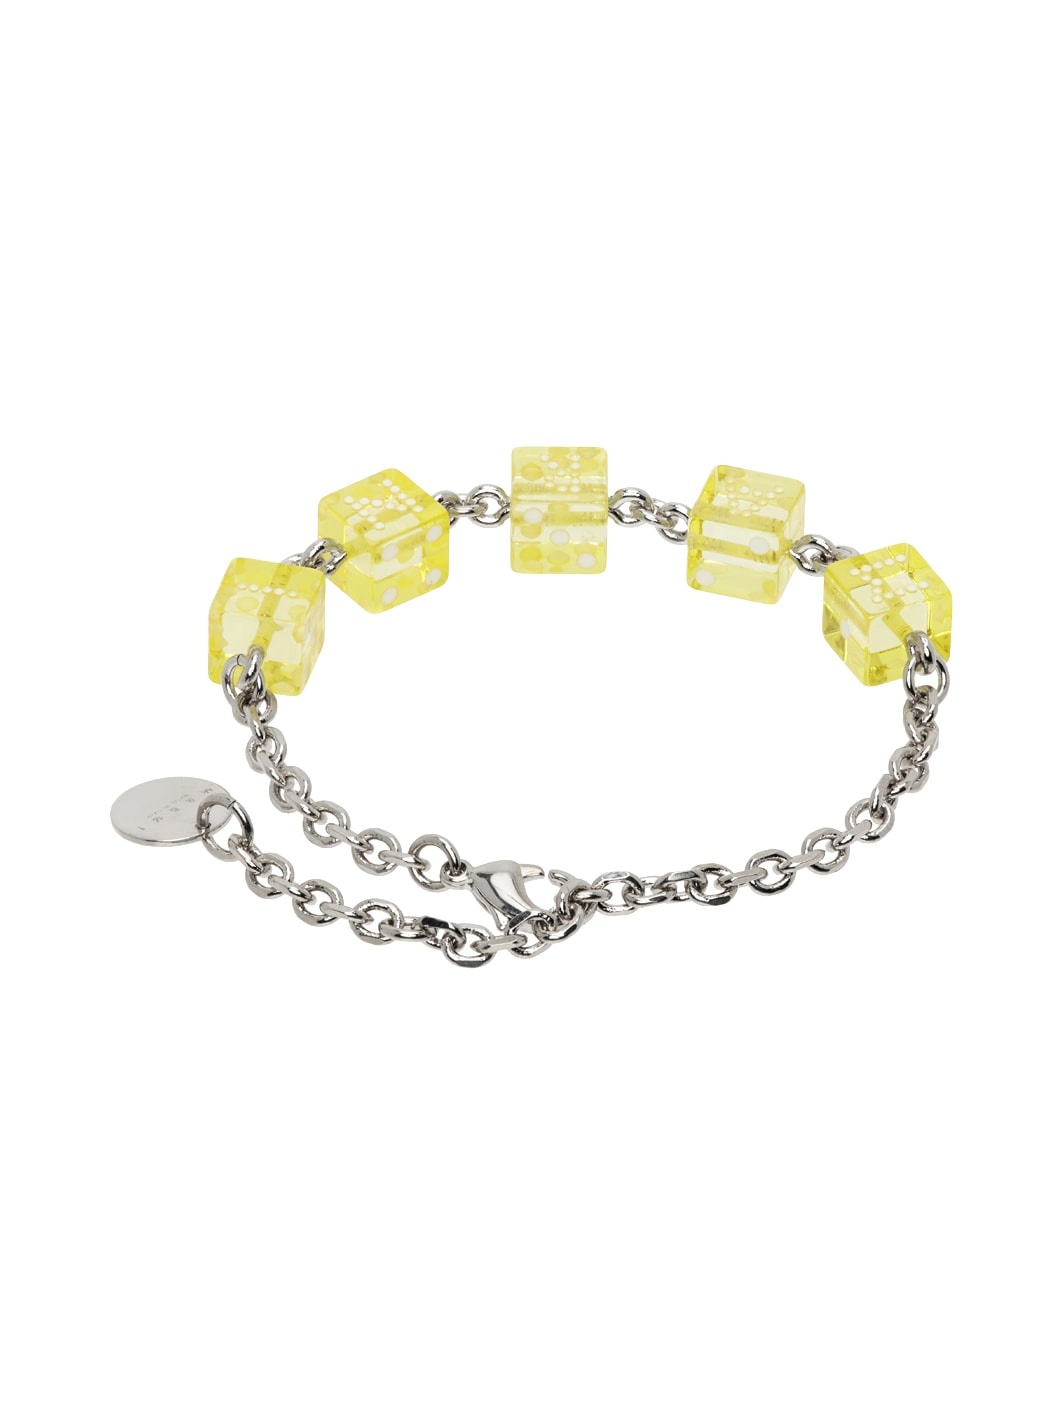 Silver & Yellow Dice Charm Bracelet - 2